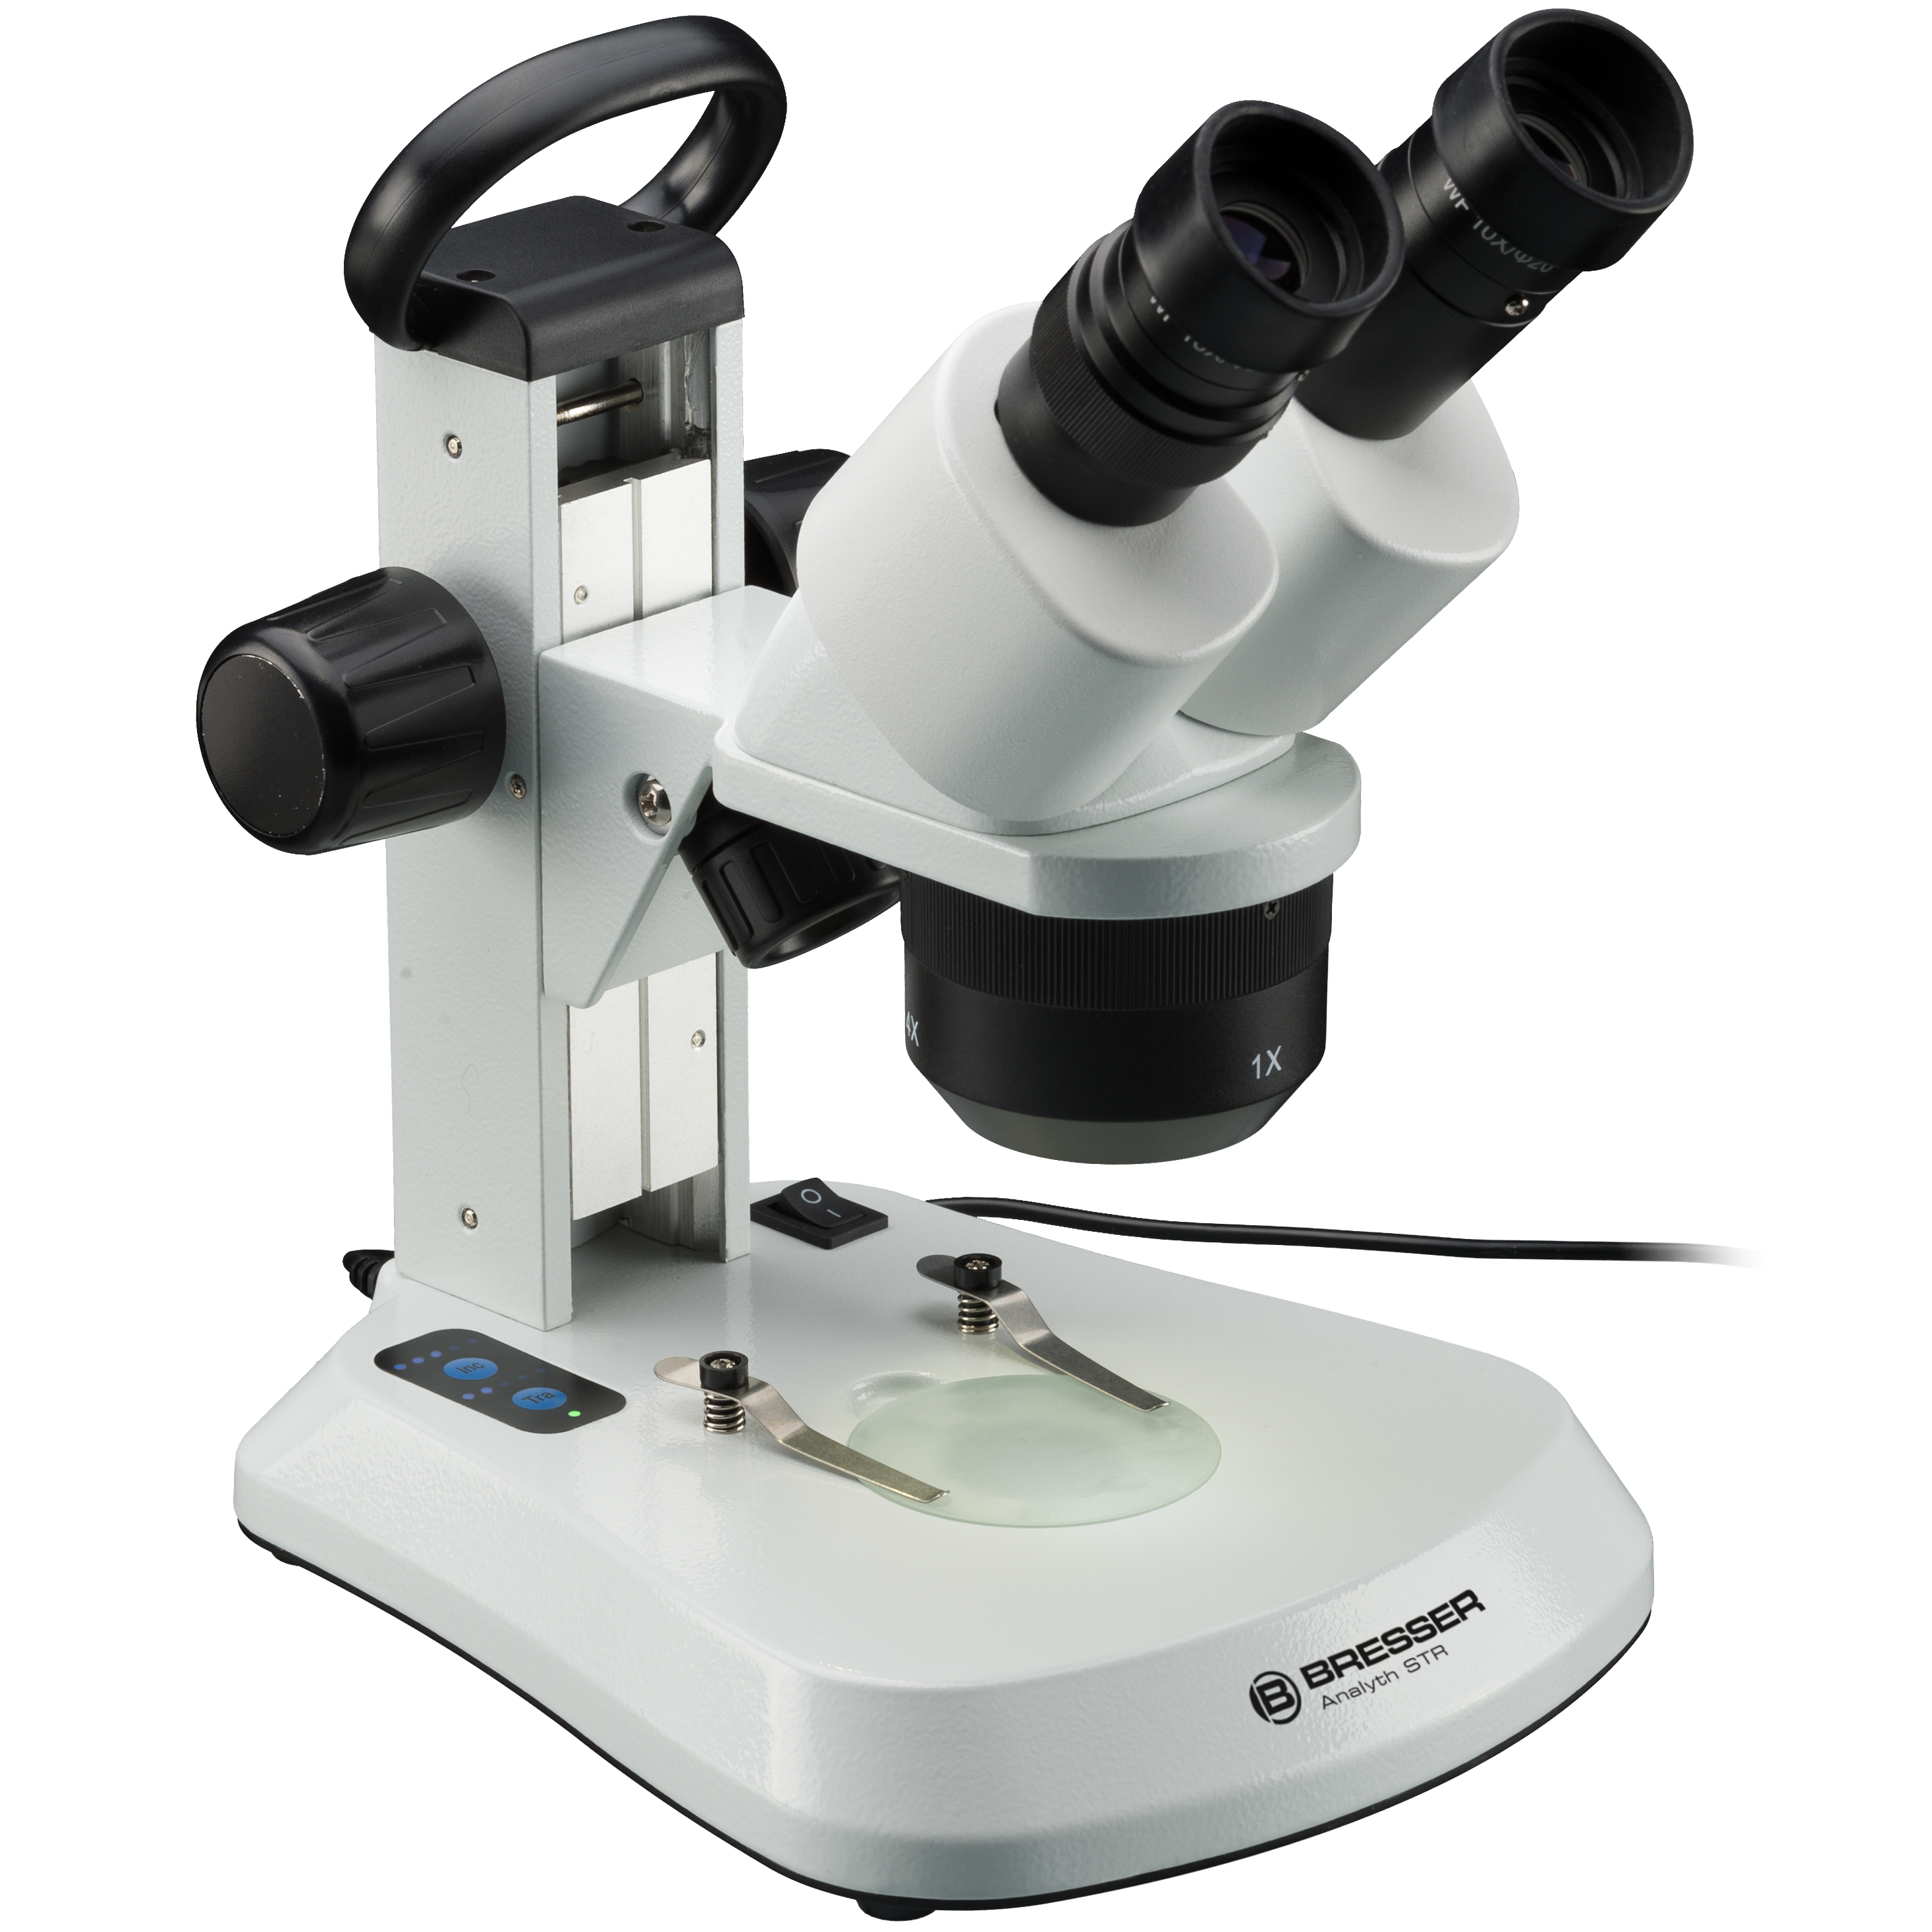 BRESSER Analyth STR 10x - 40x Microscopio stereo a luce trasmessa e incidente con telecamera oculare MikrOkular Full HD